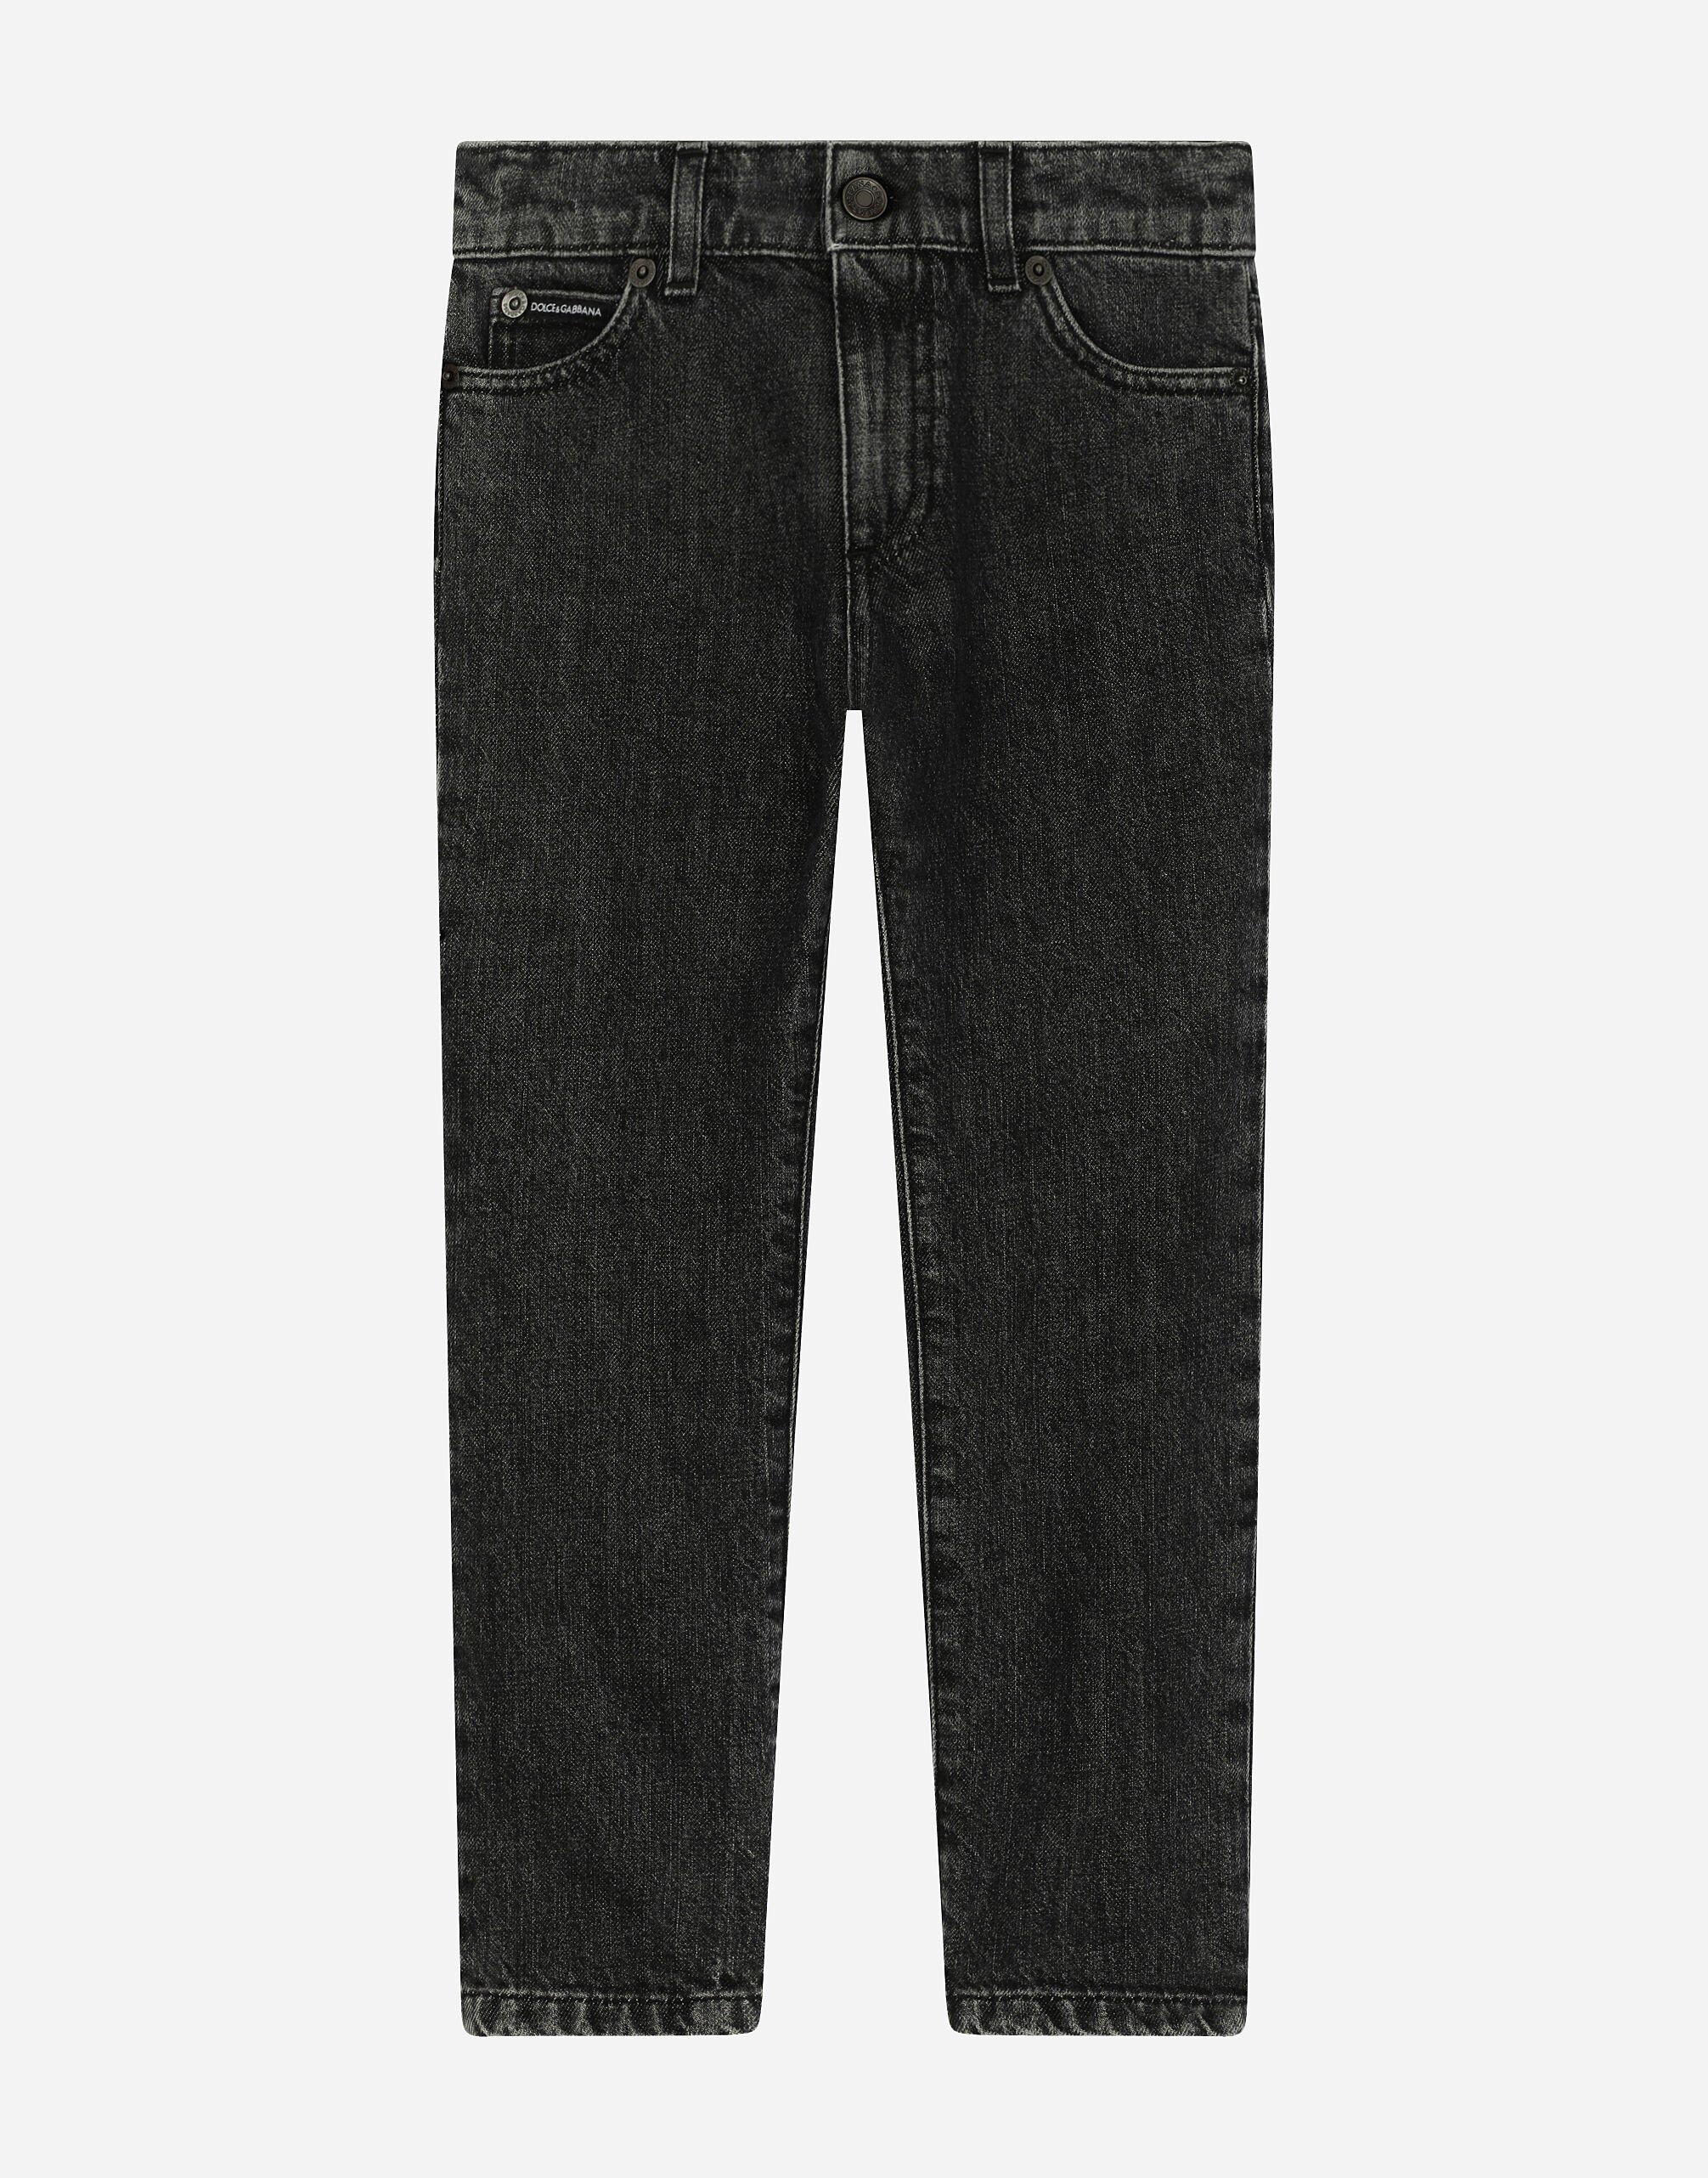 Dolce & Gabbana 5-pocket denim jeans Black L4JTEYG7K8Z